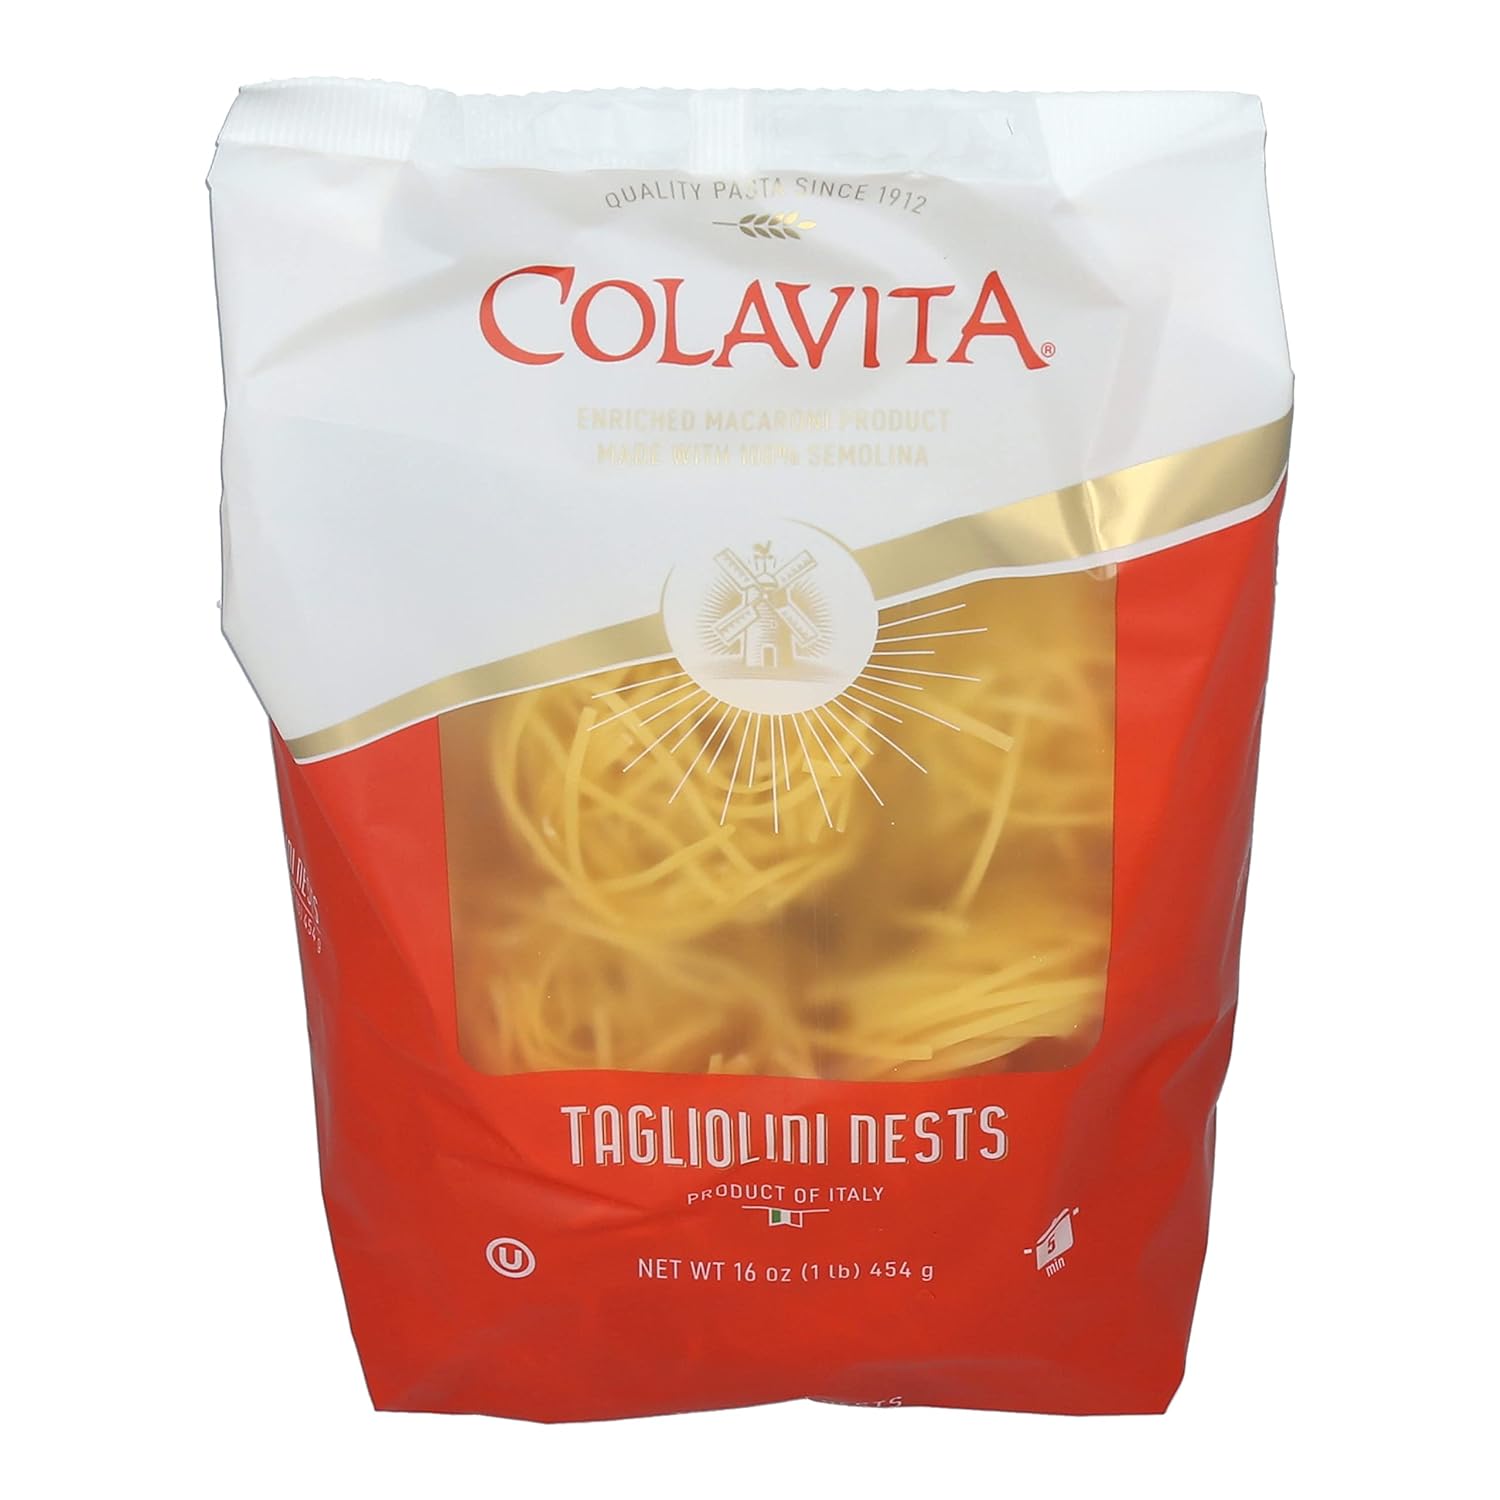 Colavita Green/White Tagliolini Nest: Vibrant Duo-Toned Pasta - Add Color & Flavor to Your Dishes (Pack of 10)